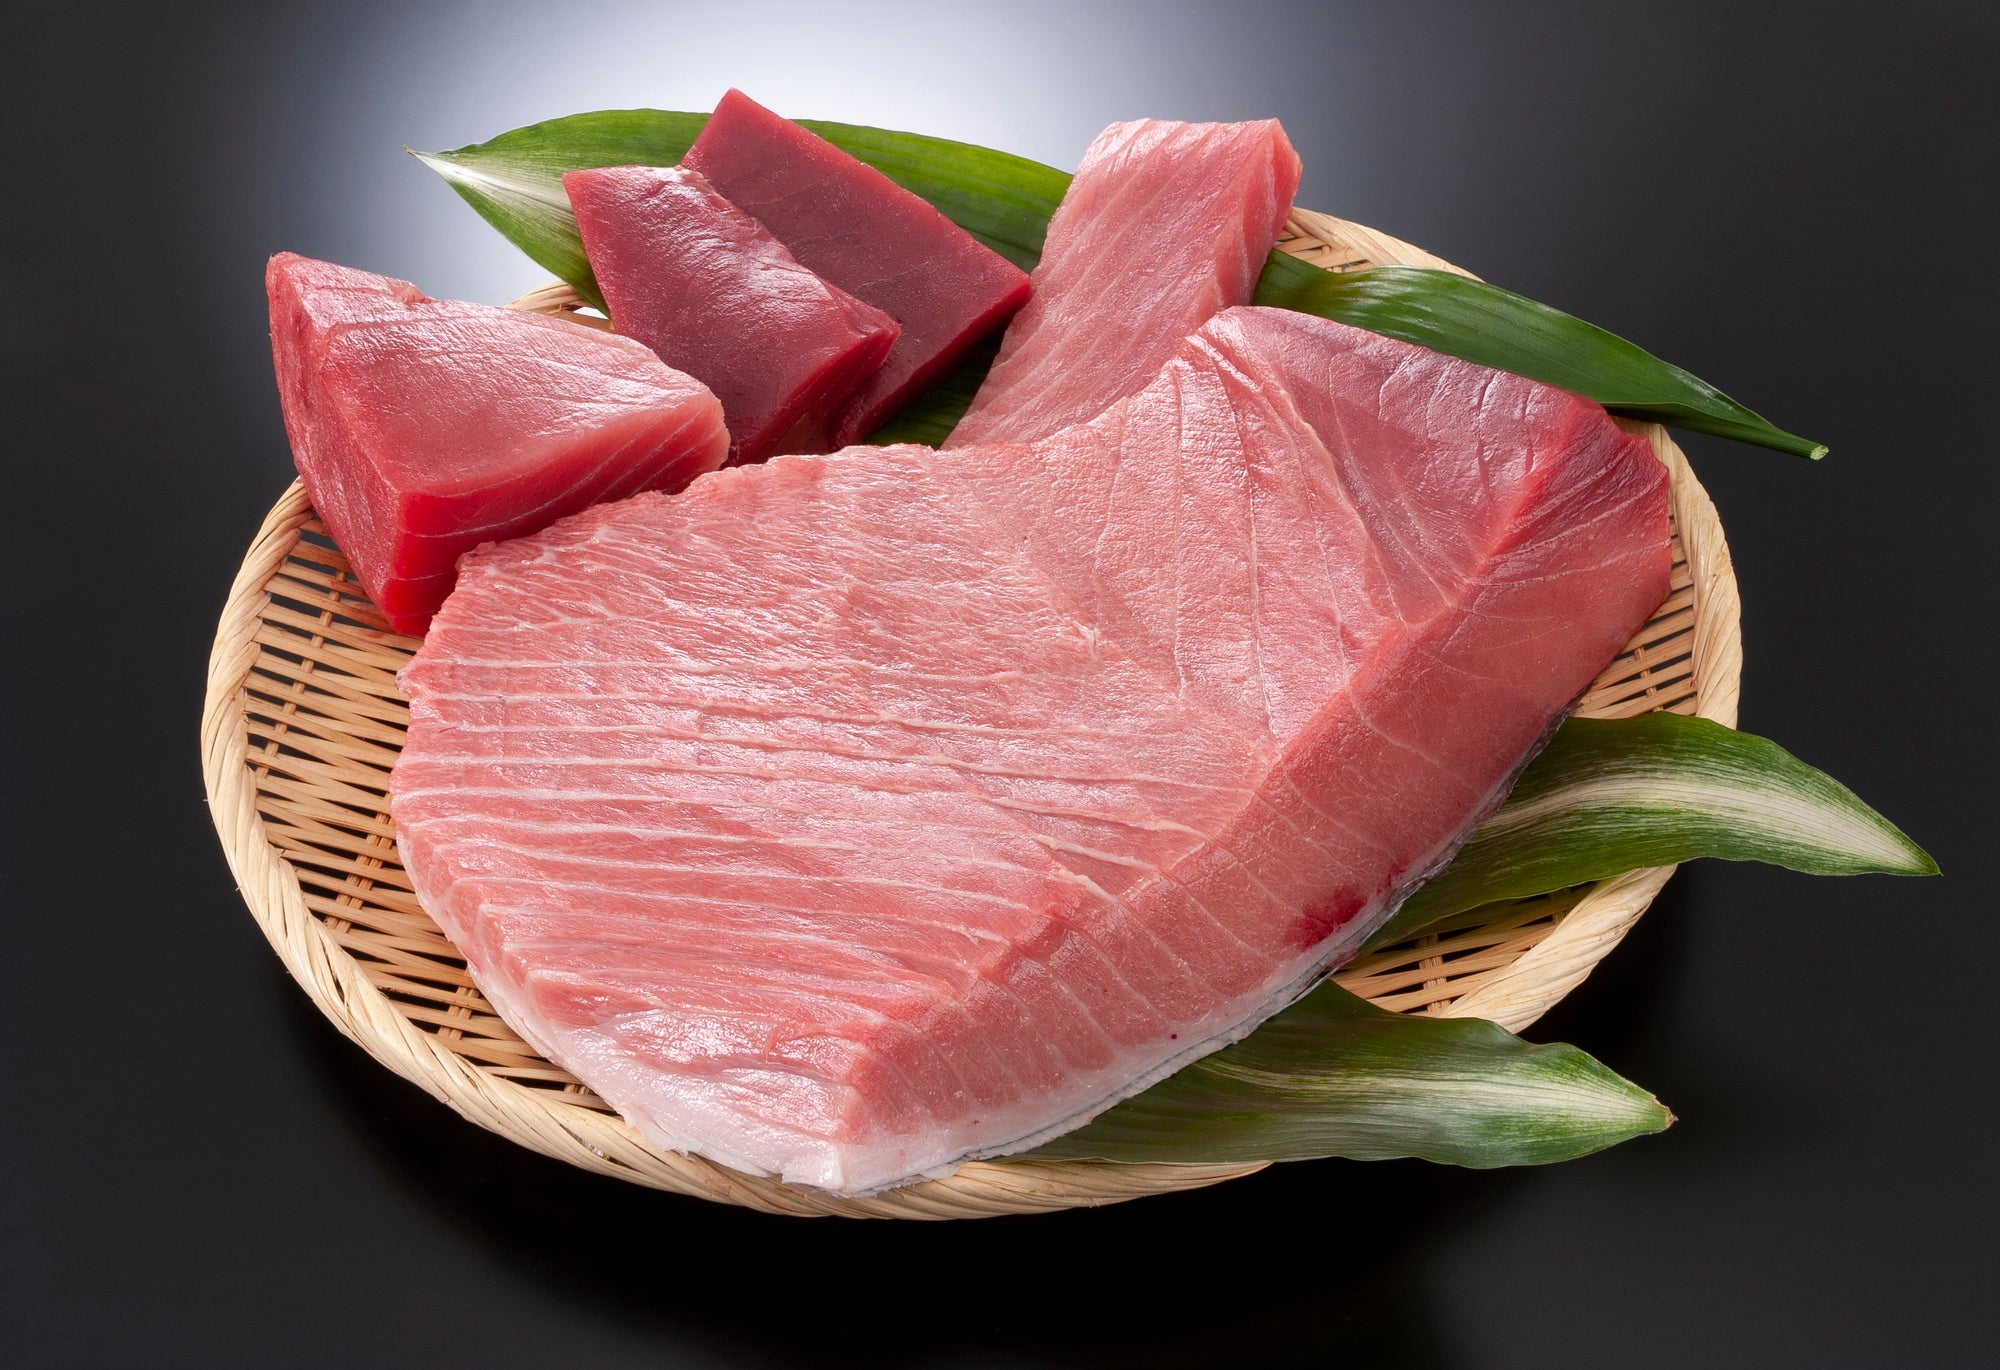 Bluefin Tuna  (Sashimi Quality) 20lb